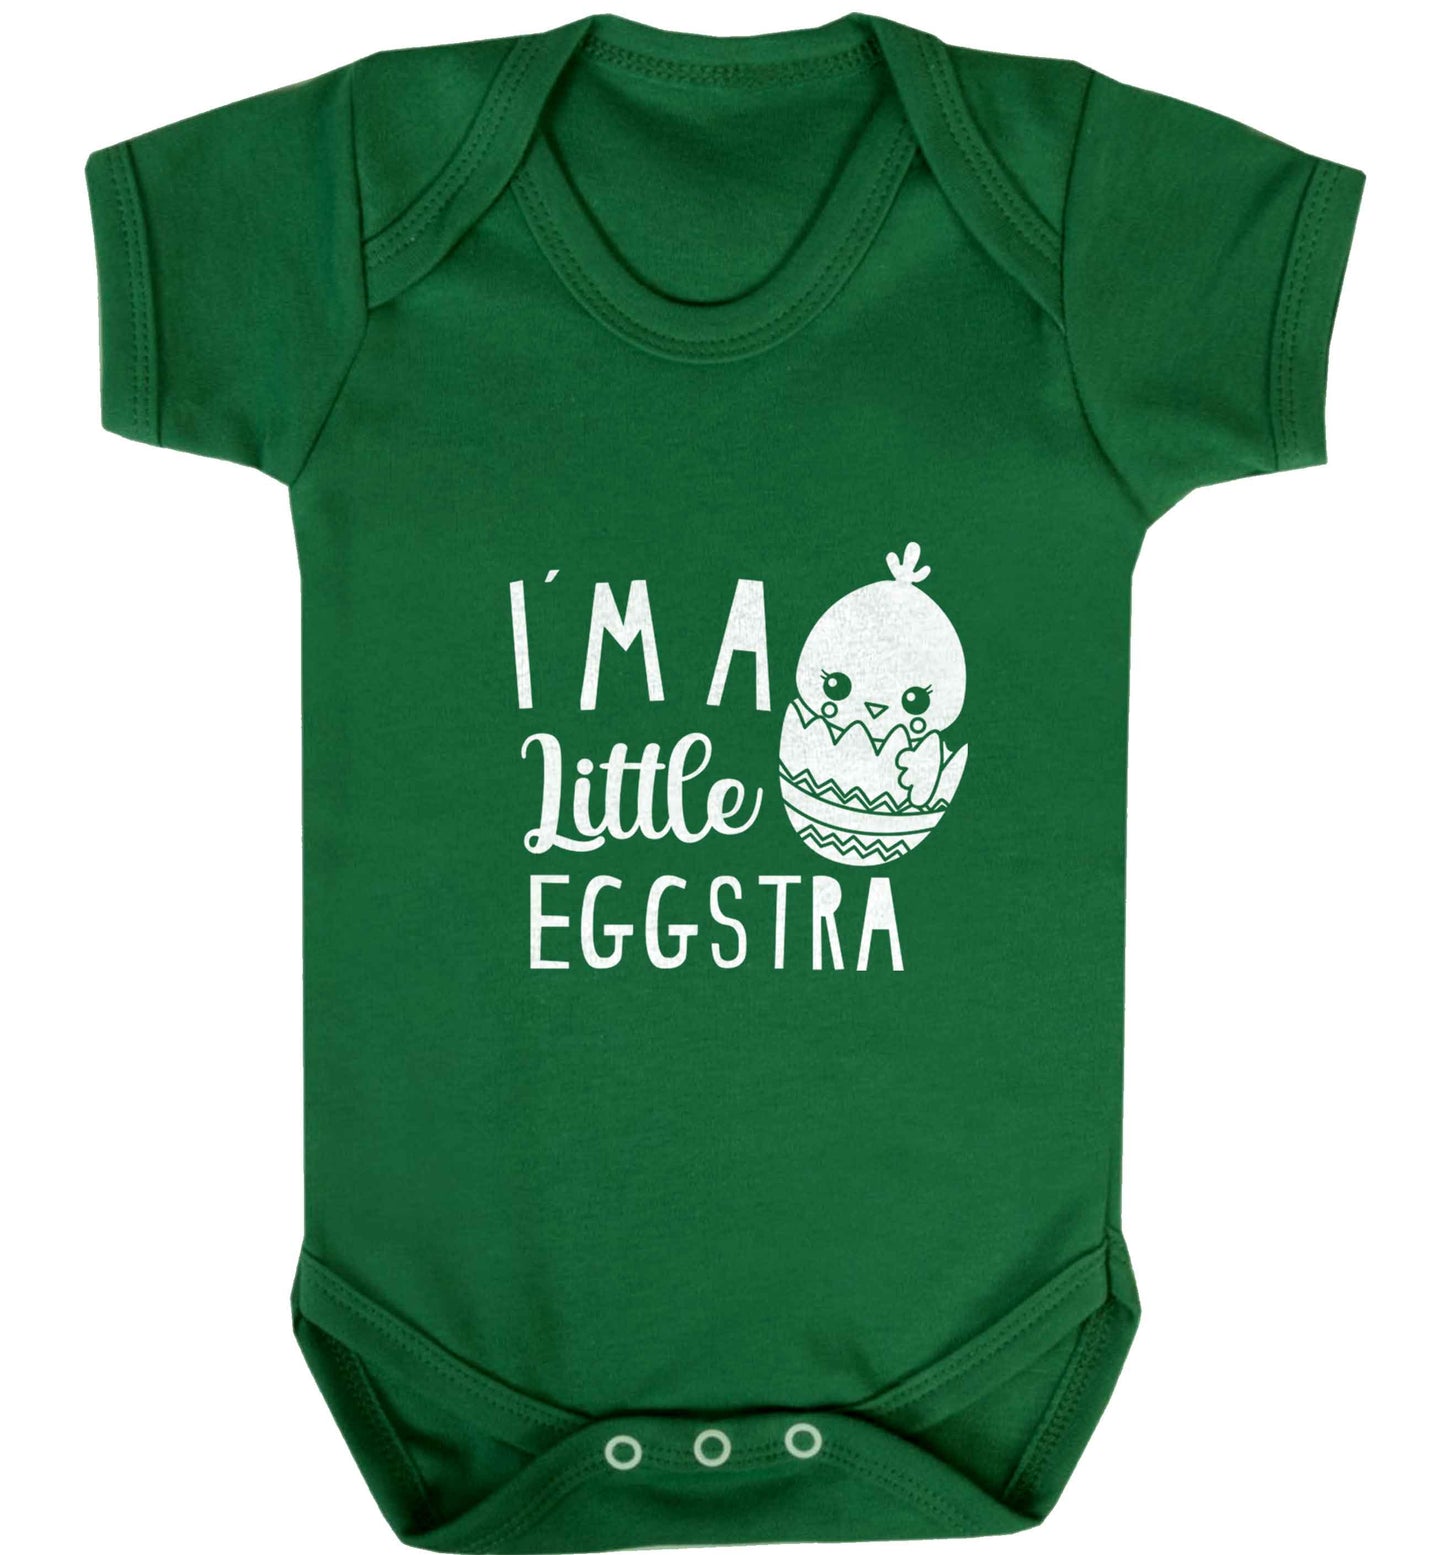 I'm a little eggstra baby vest green 18-24 months